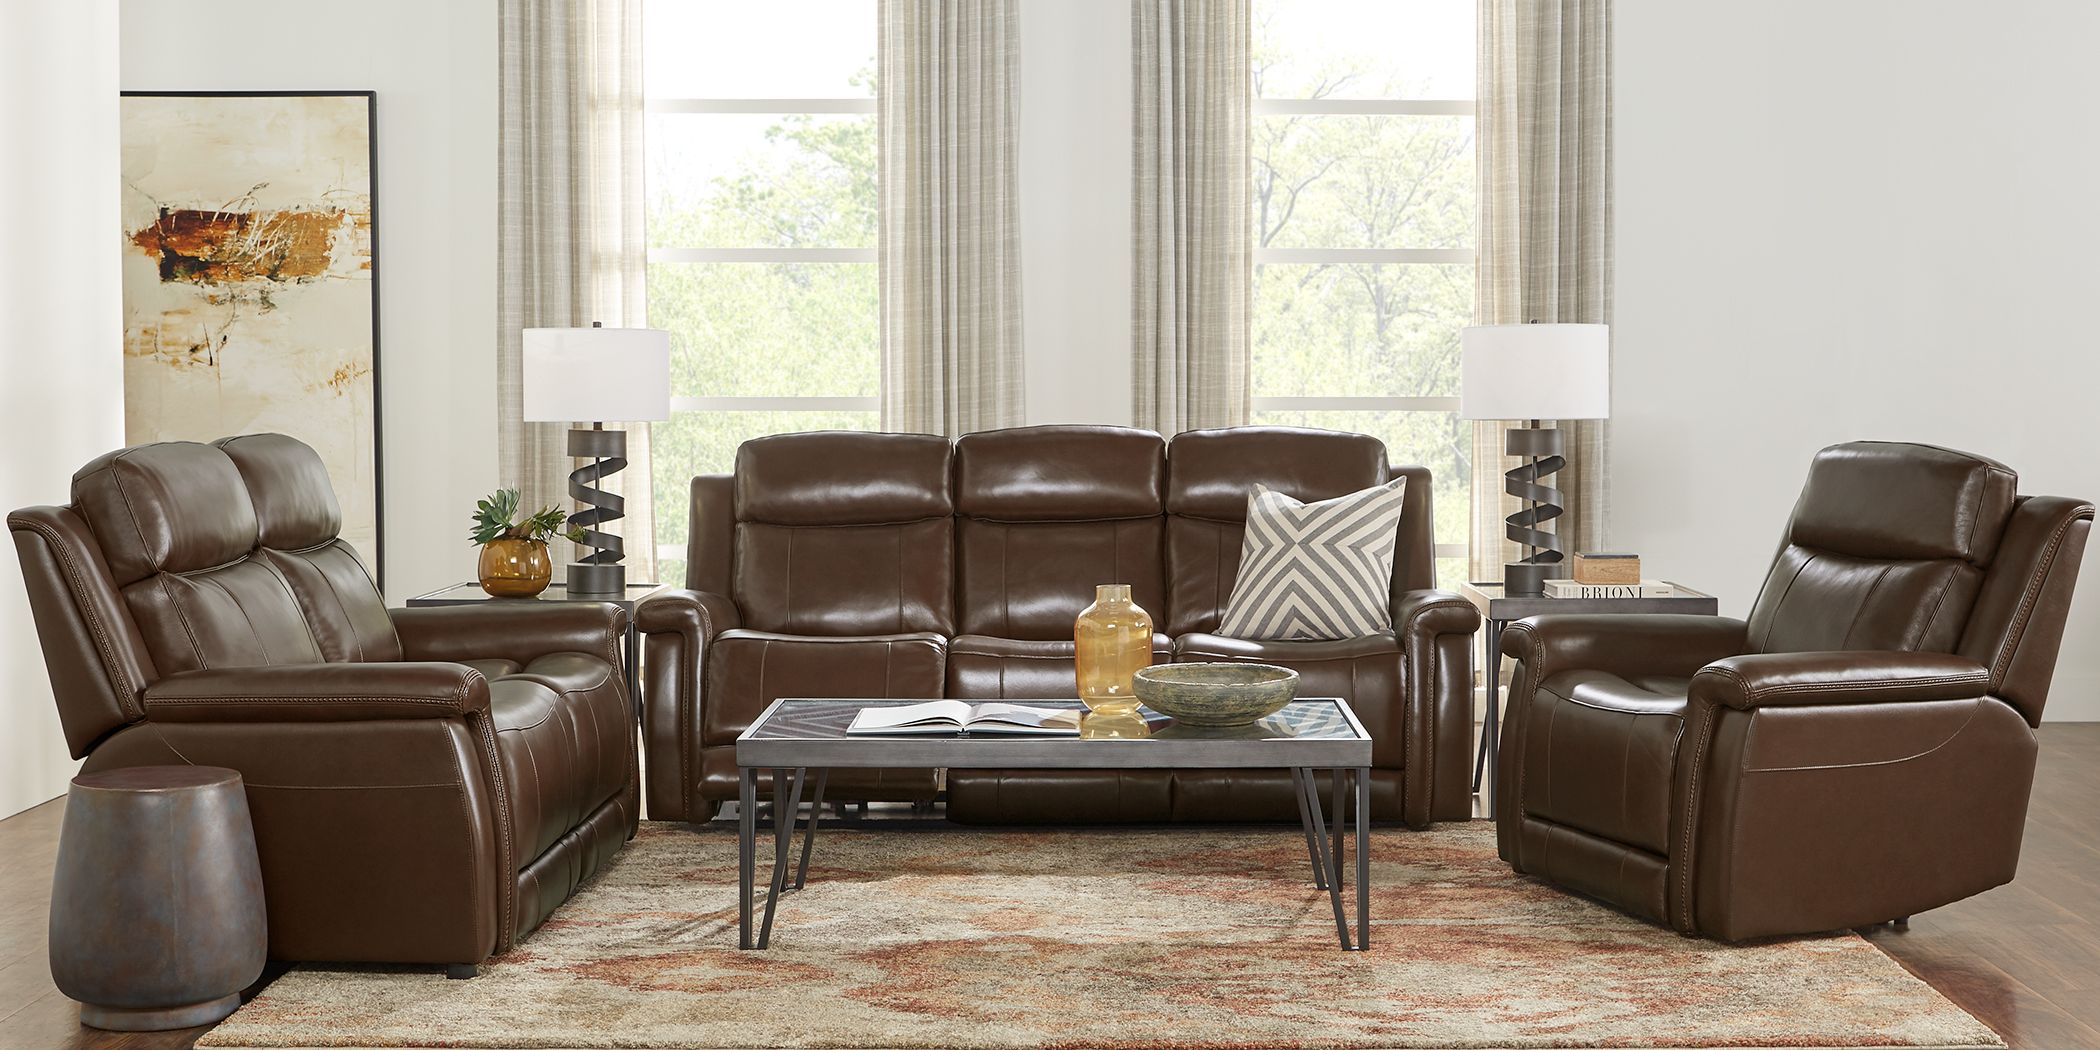 Leather Living Room Sets Furniture, Brown Leather Living Room Furniture